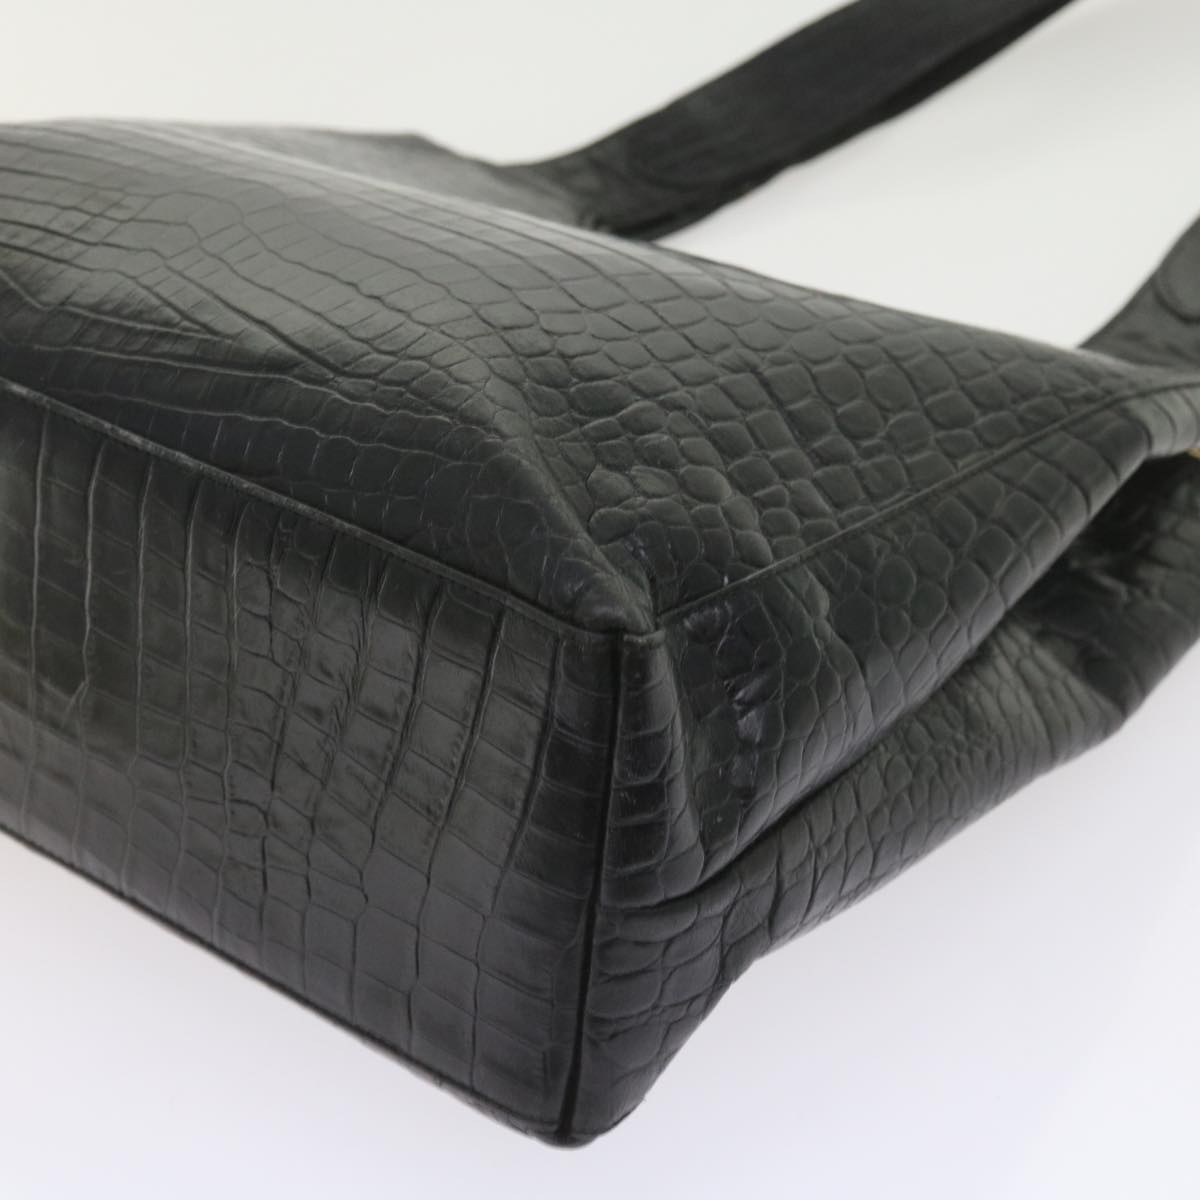 Salvatore Ferragamo Shoulder Bag Leather Black Auth ar10731